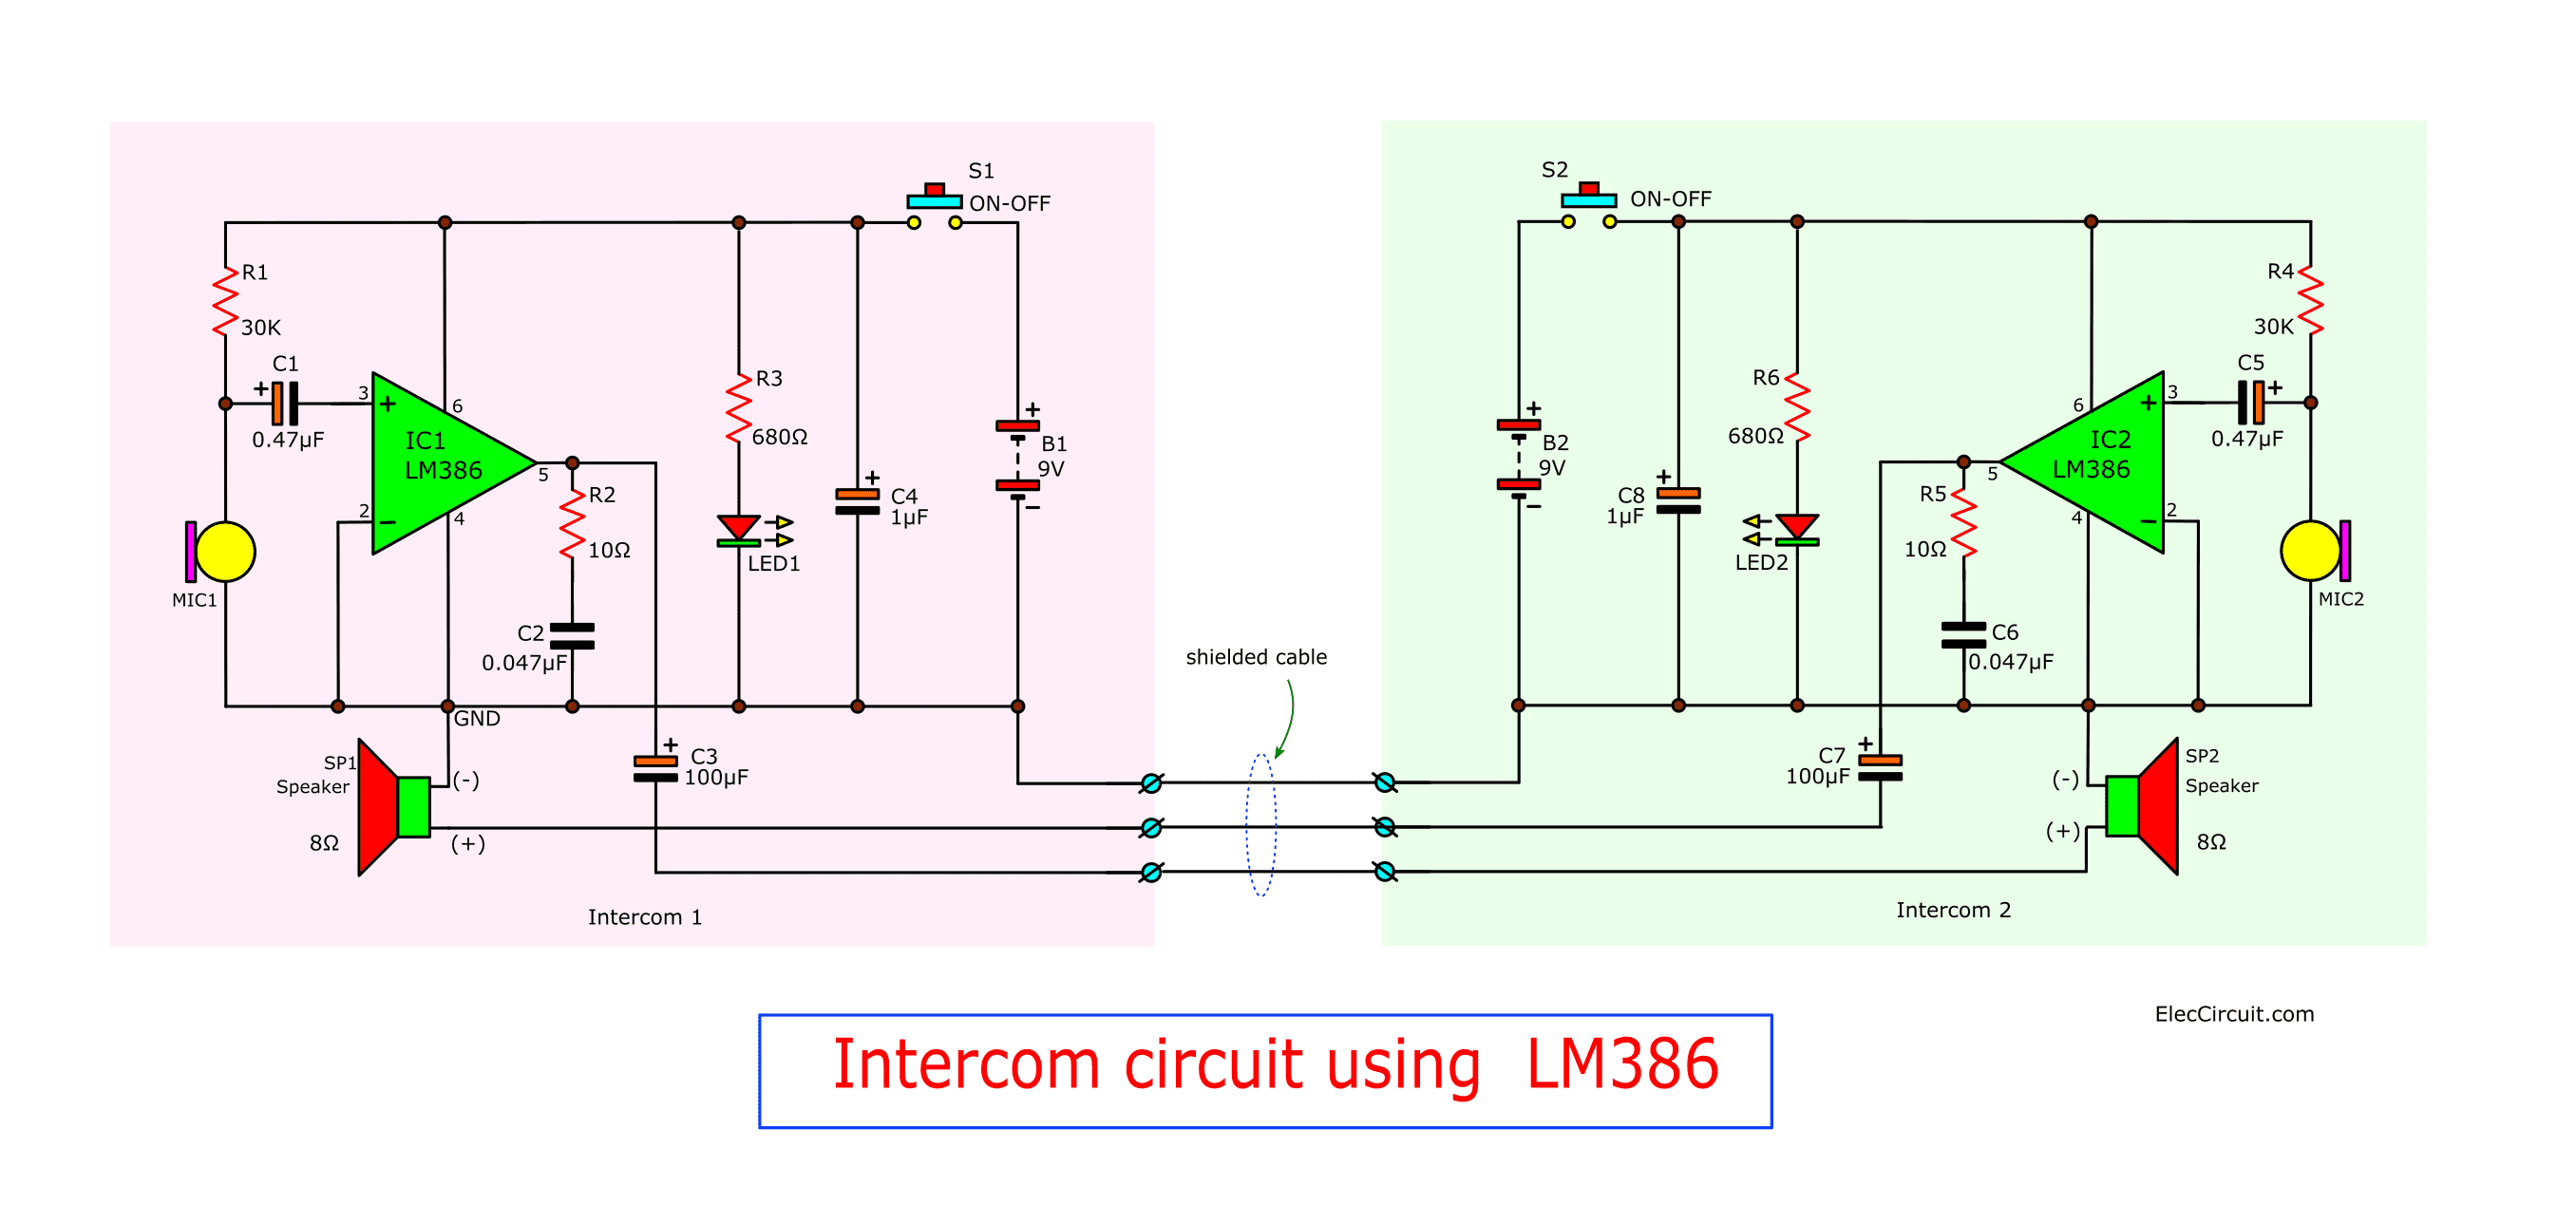 Intercom circuit using LM386